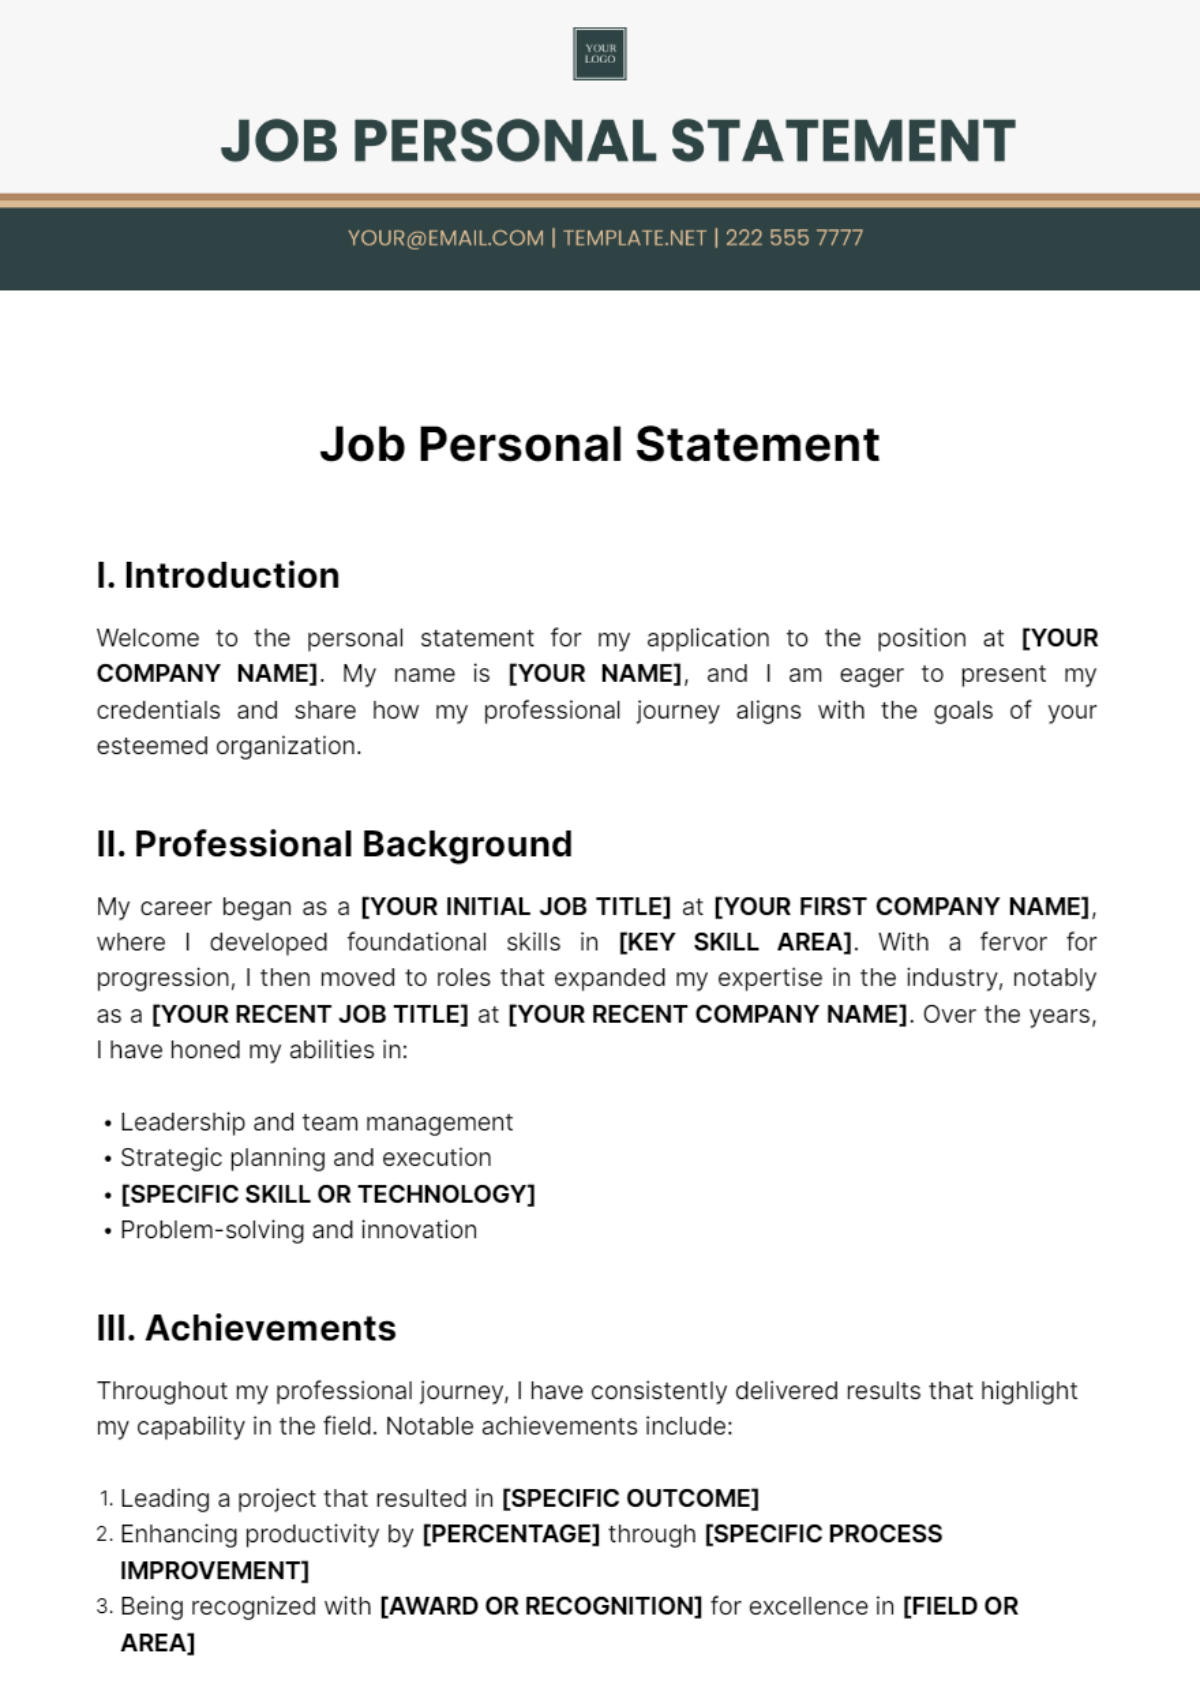 Free Job Personal Statement Template